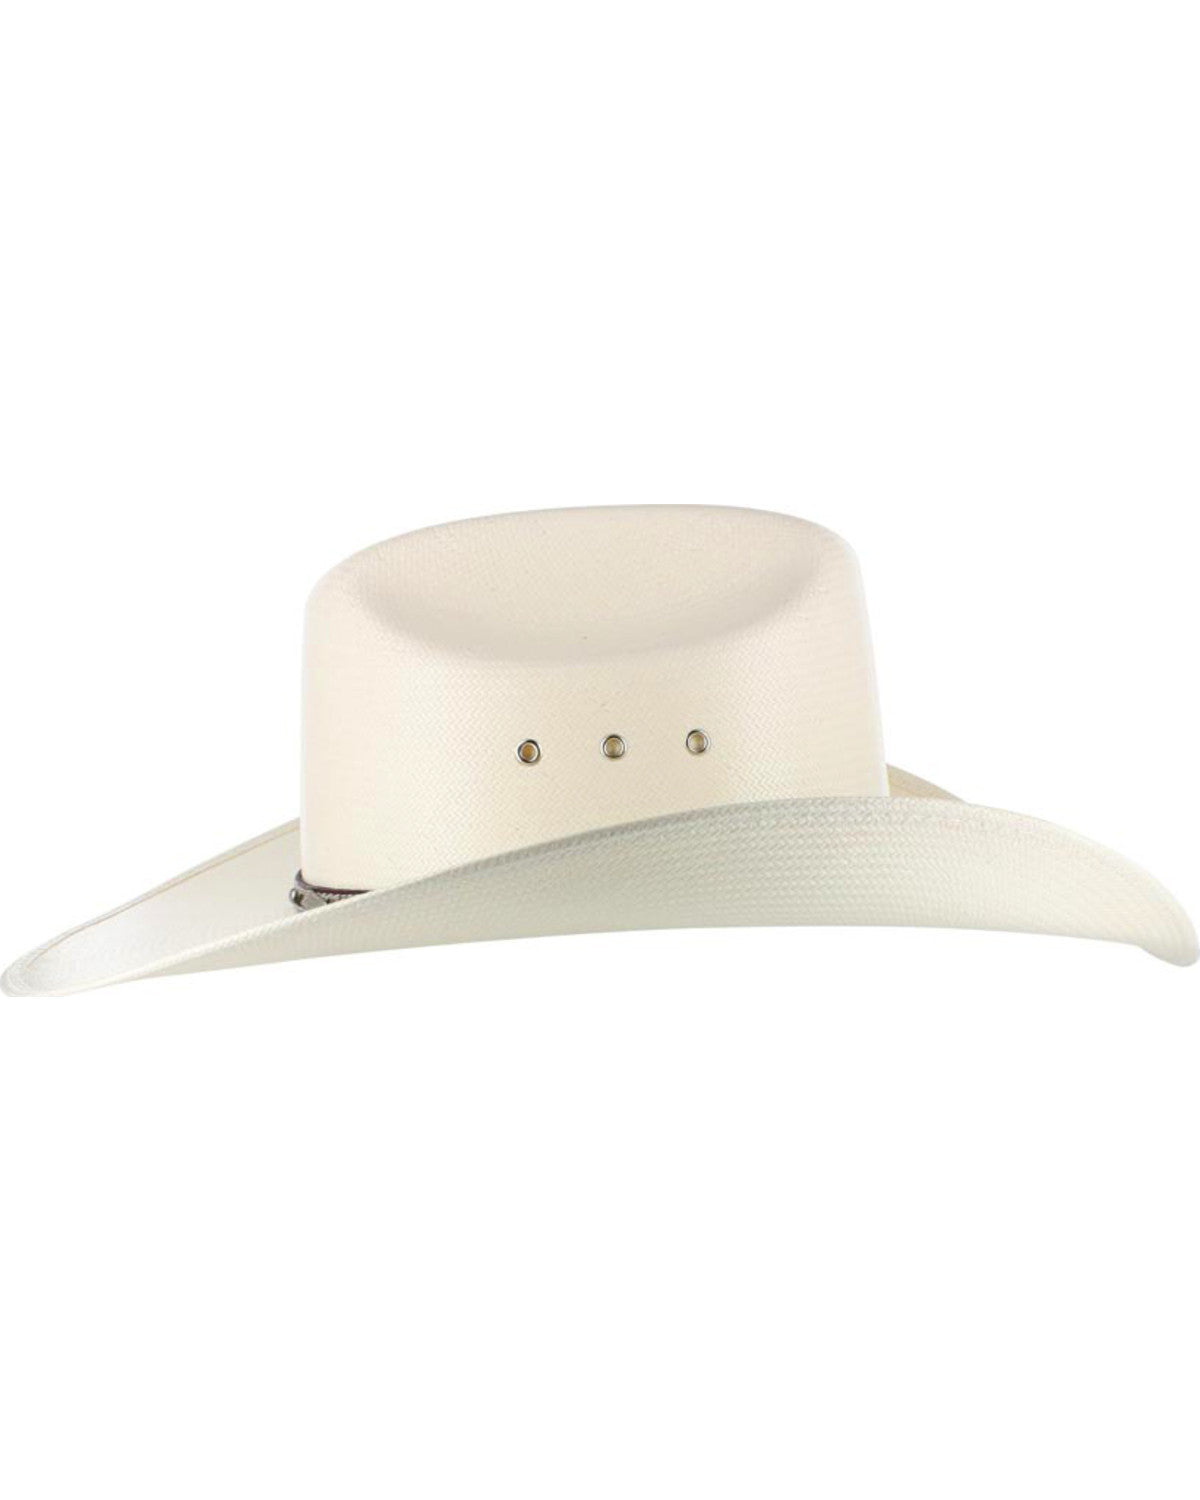 Larry Mahan's Men's 10X Brindle Straw Hat